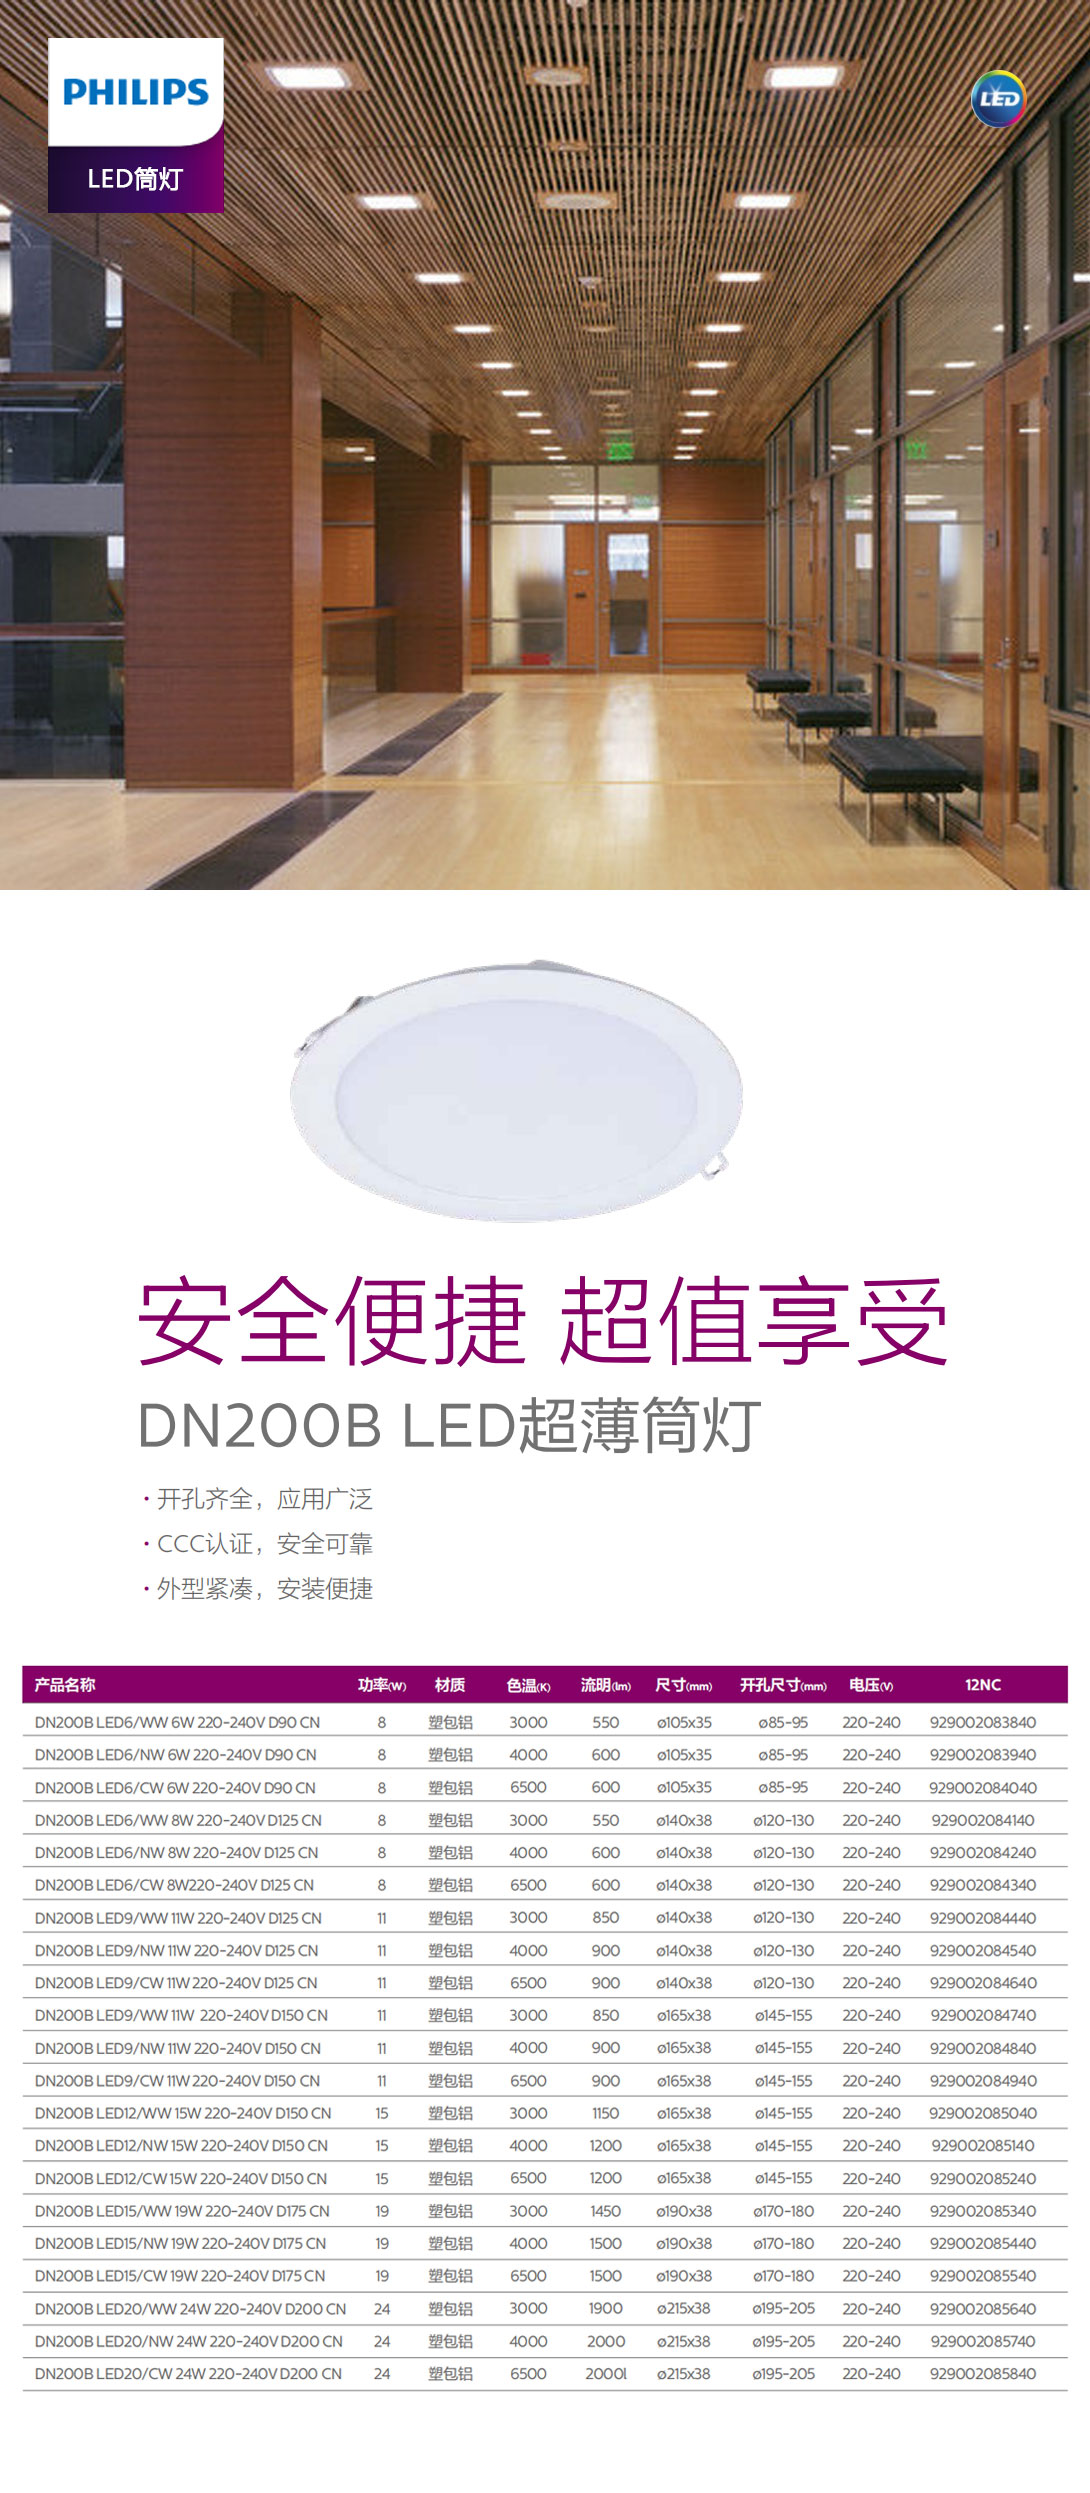 DN200B-LED超薄筒灯.jpg